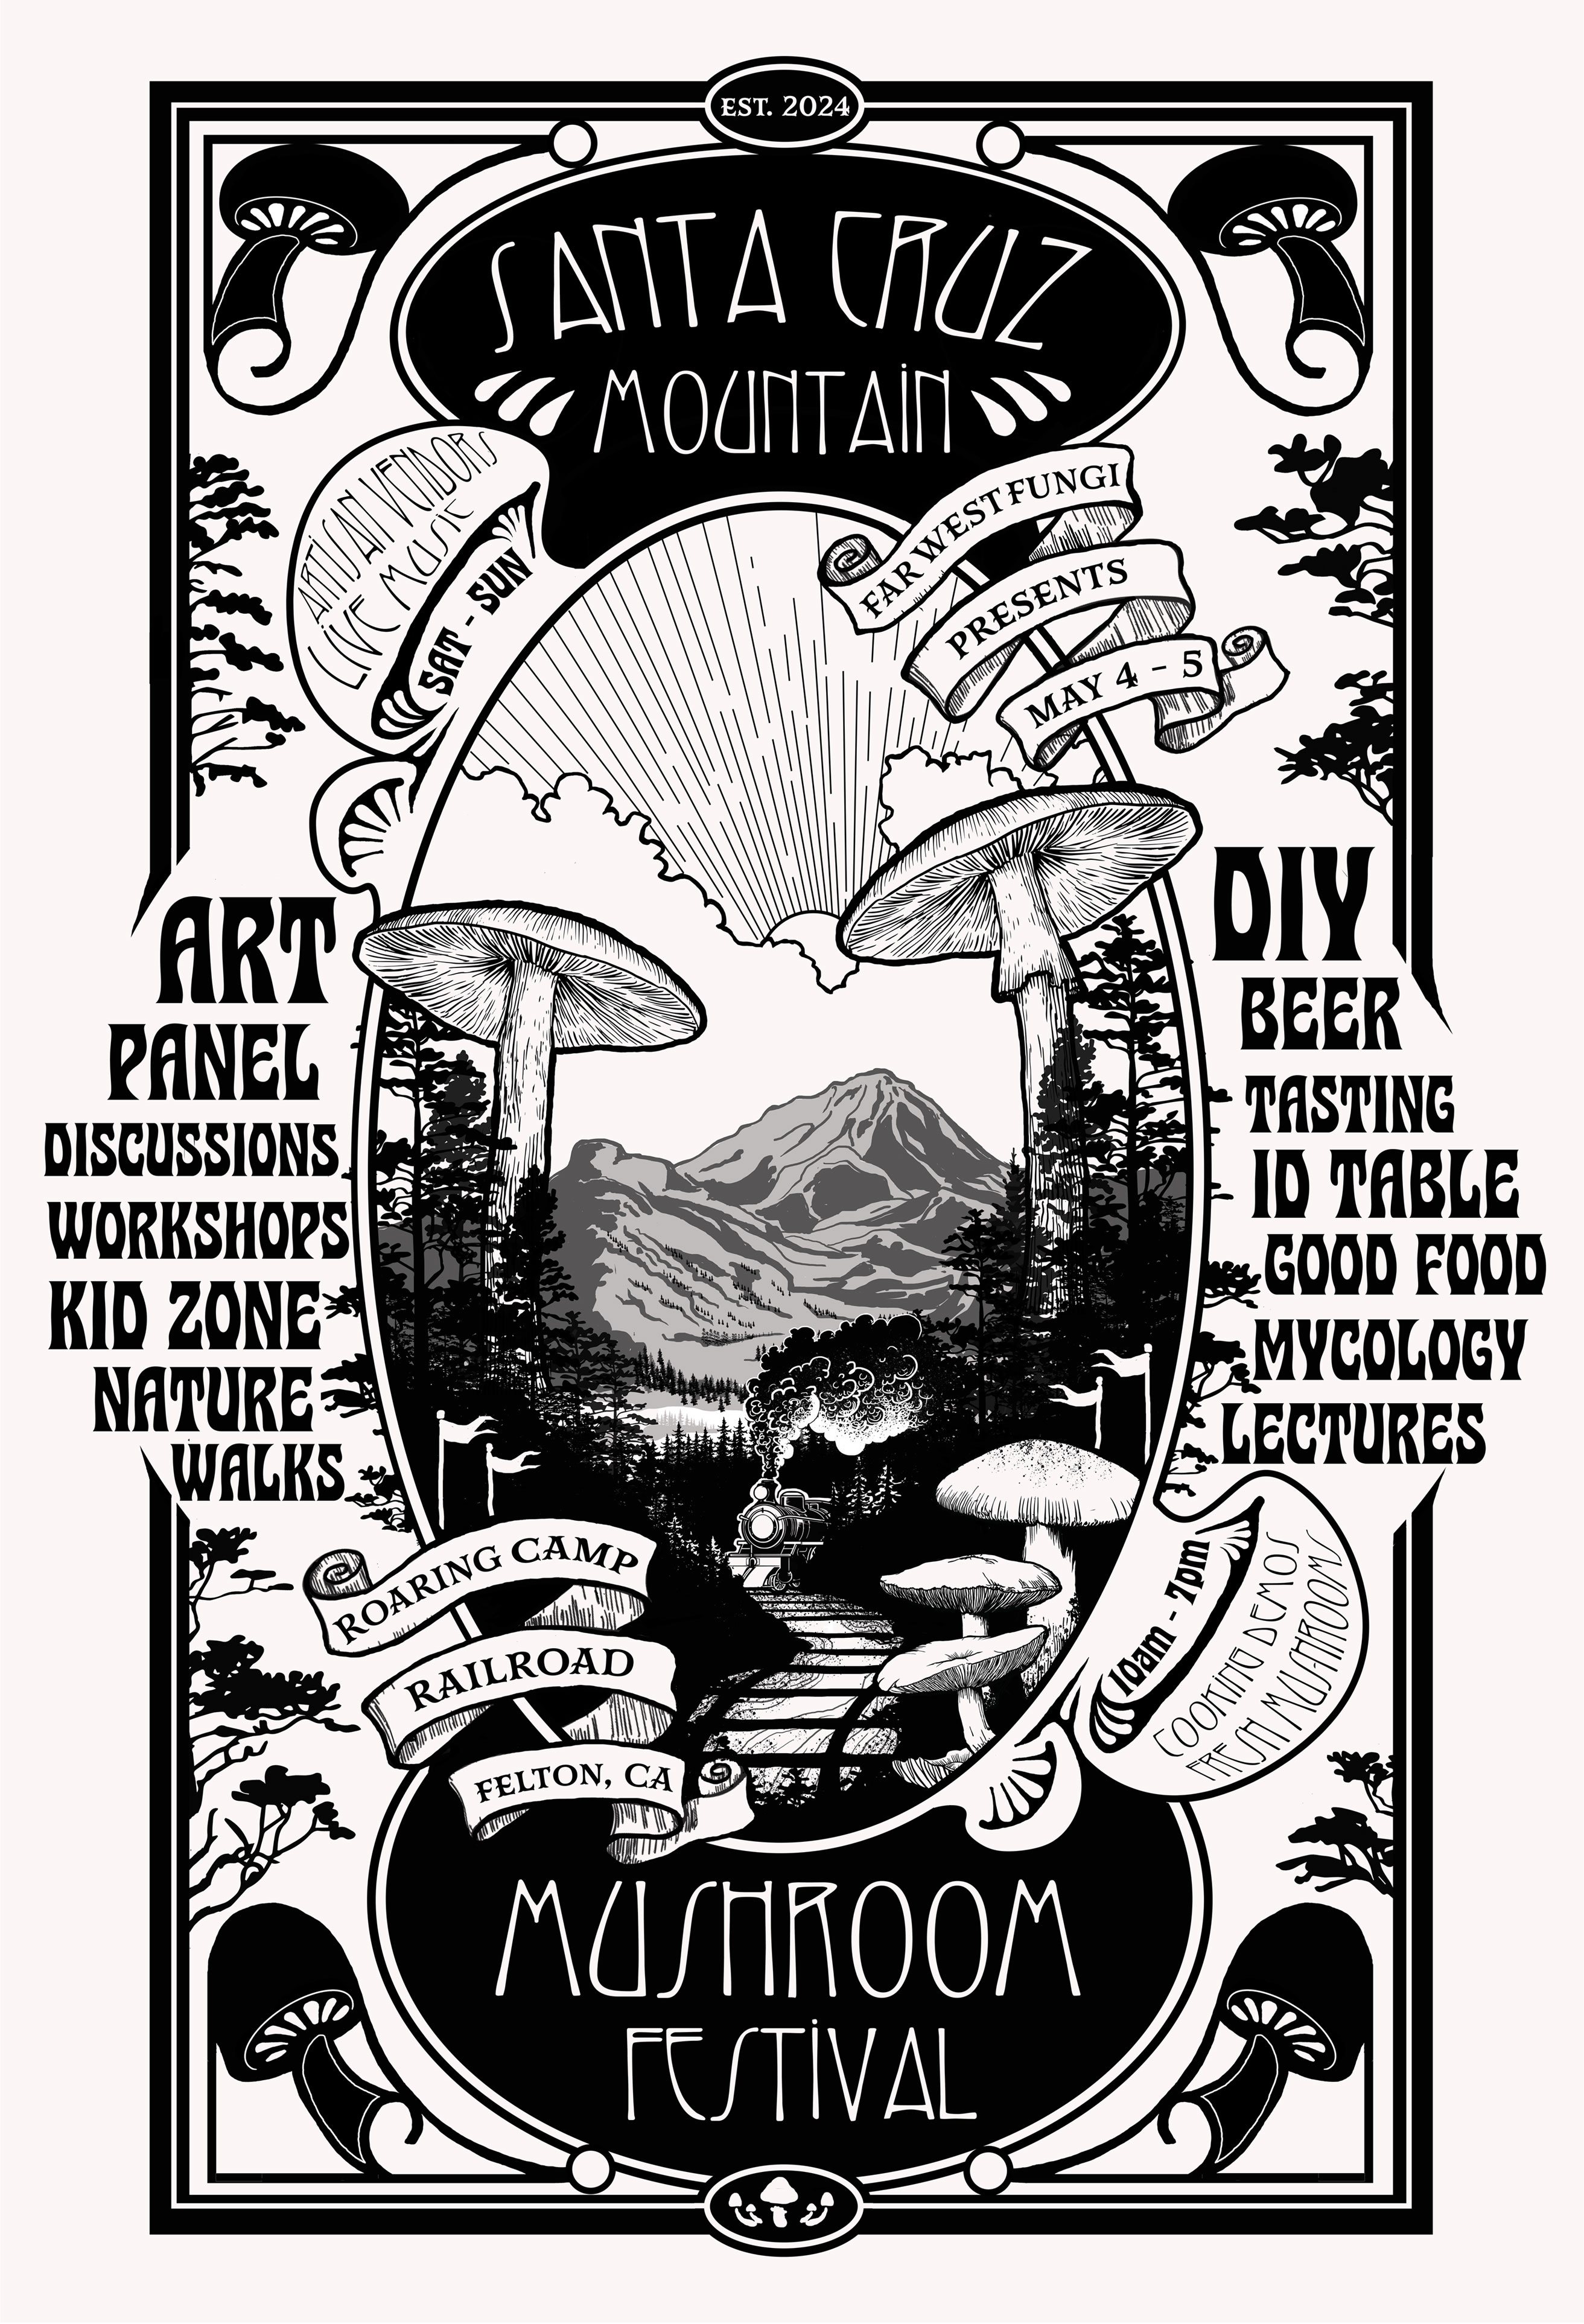 Santa Cruz Mountain Mushroom Festival